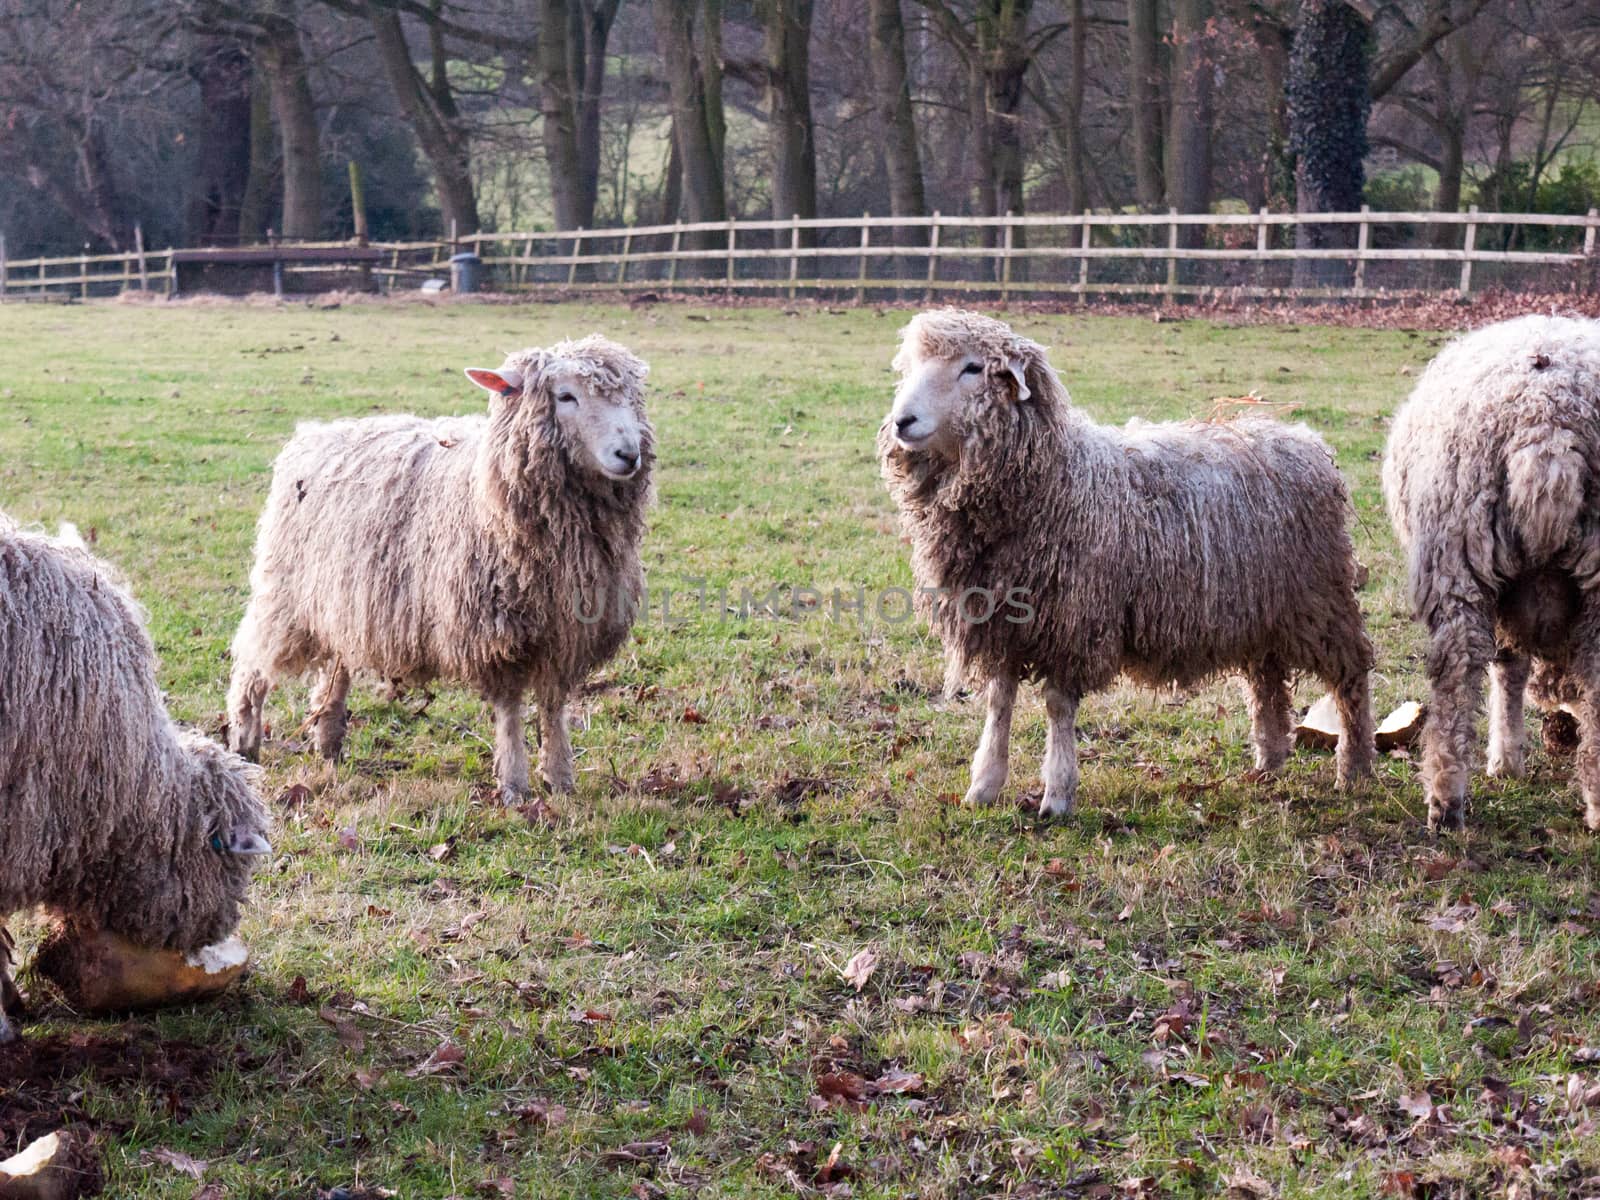 english uk farm sheep feeding grazing autumn cold; essex; england; uk